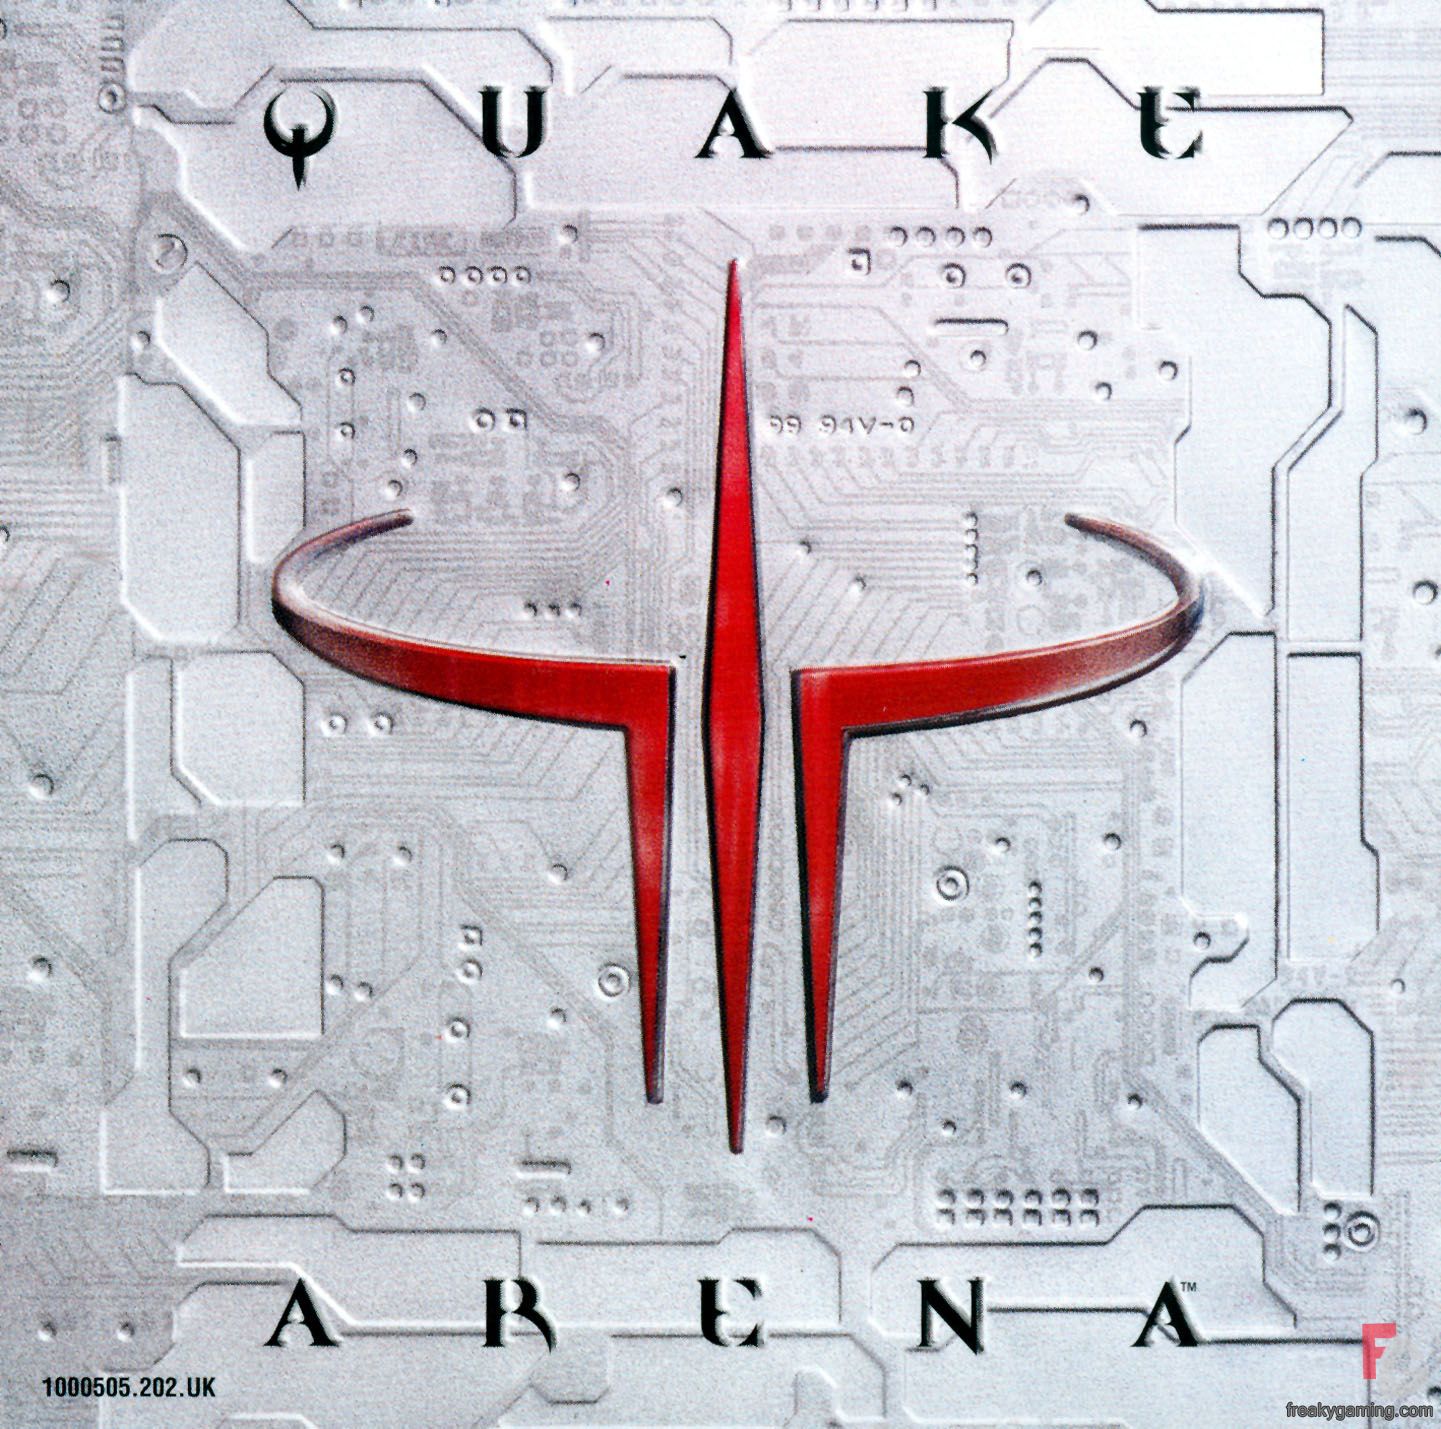 Quake 1 download